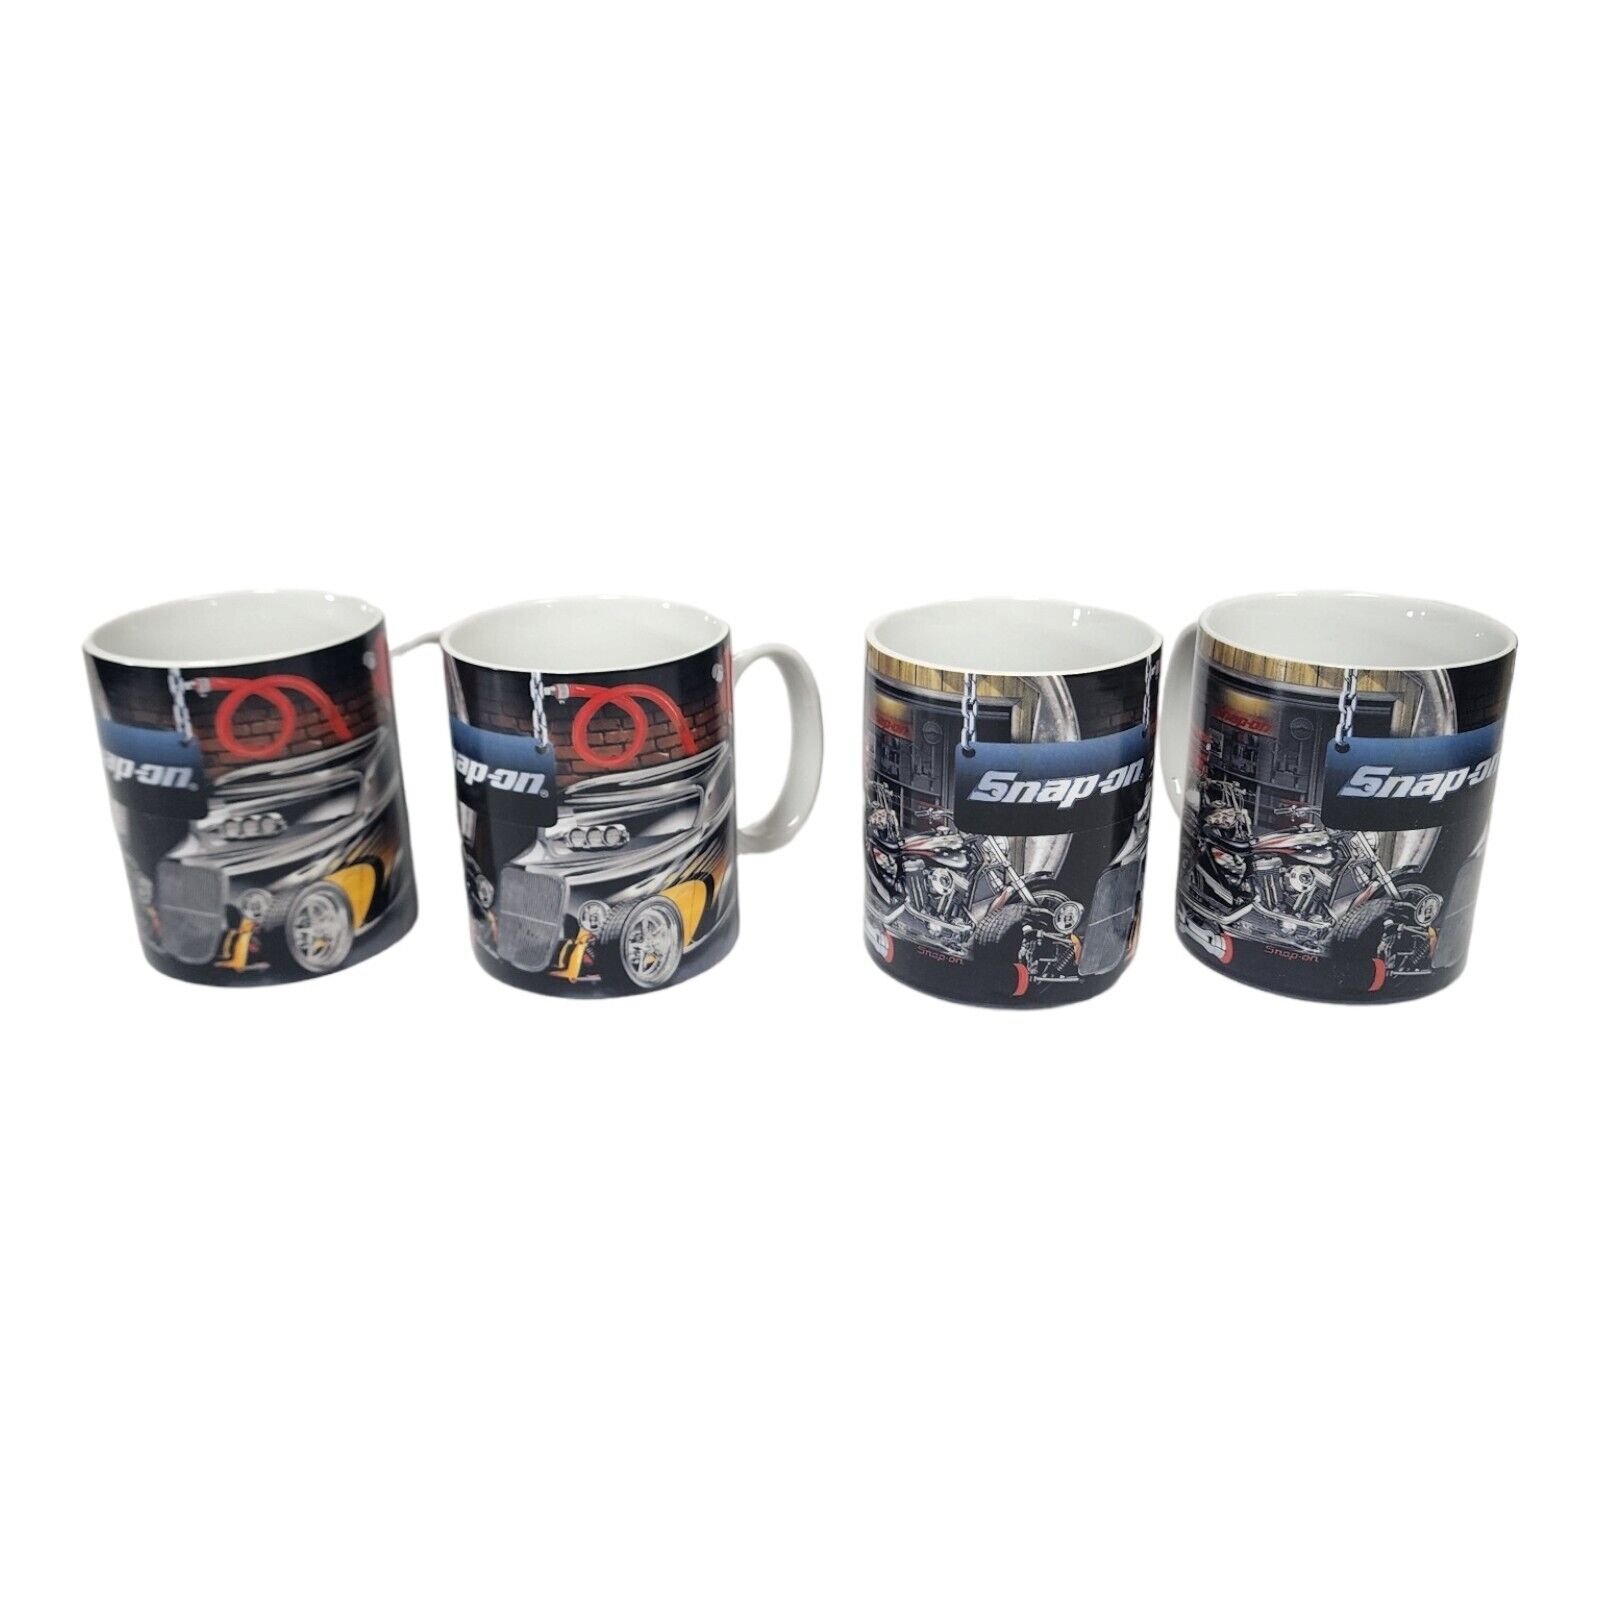 Snap-on Tools 4pc Ceramic Coffee Mug Set Automotive Tool Themed Drinkware Cups